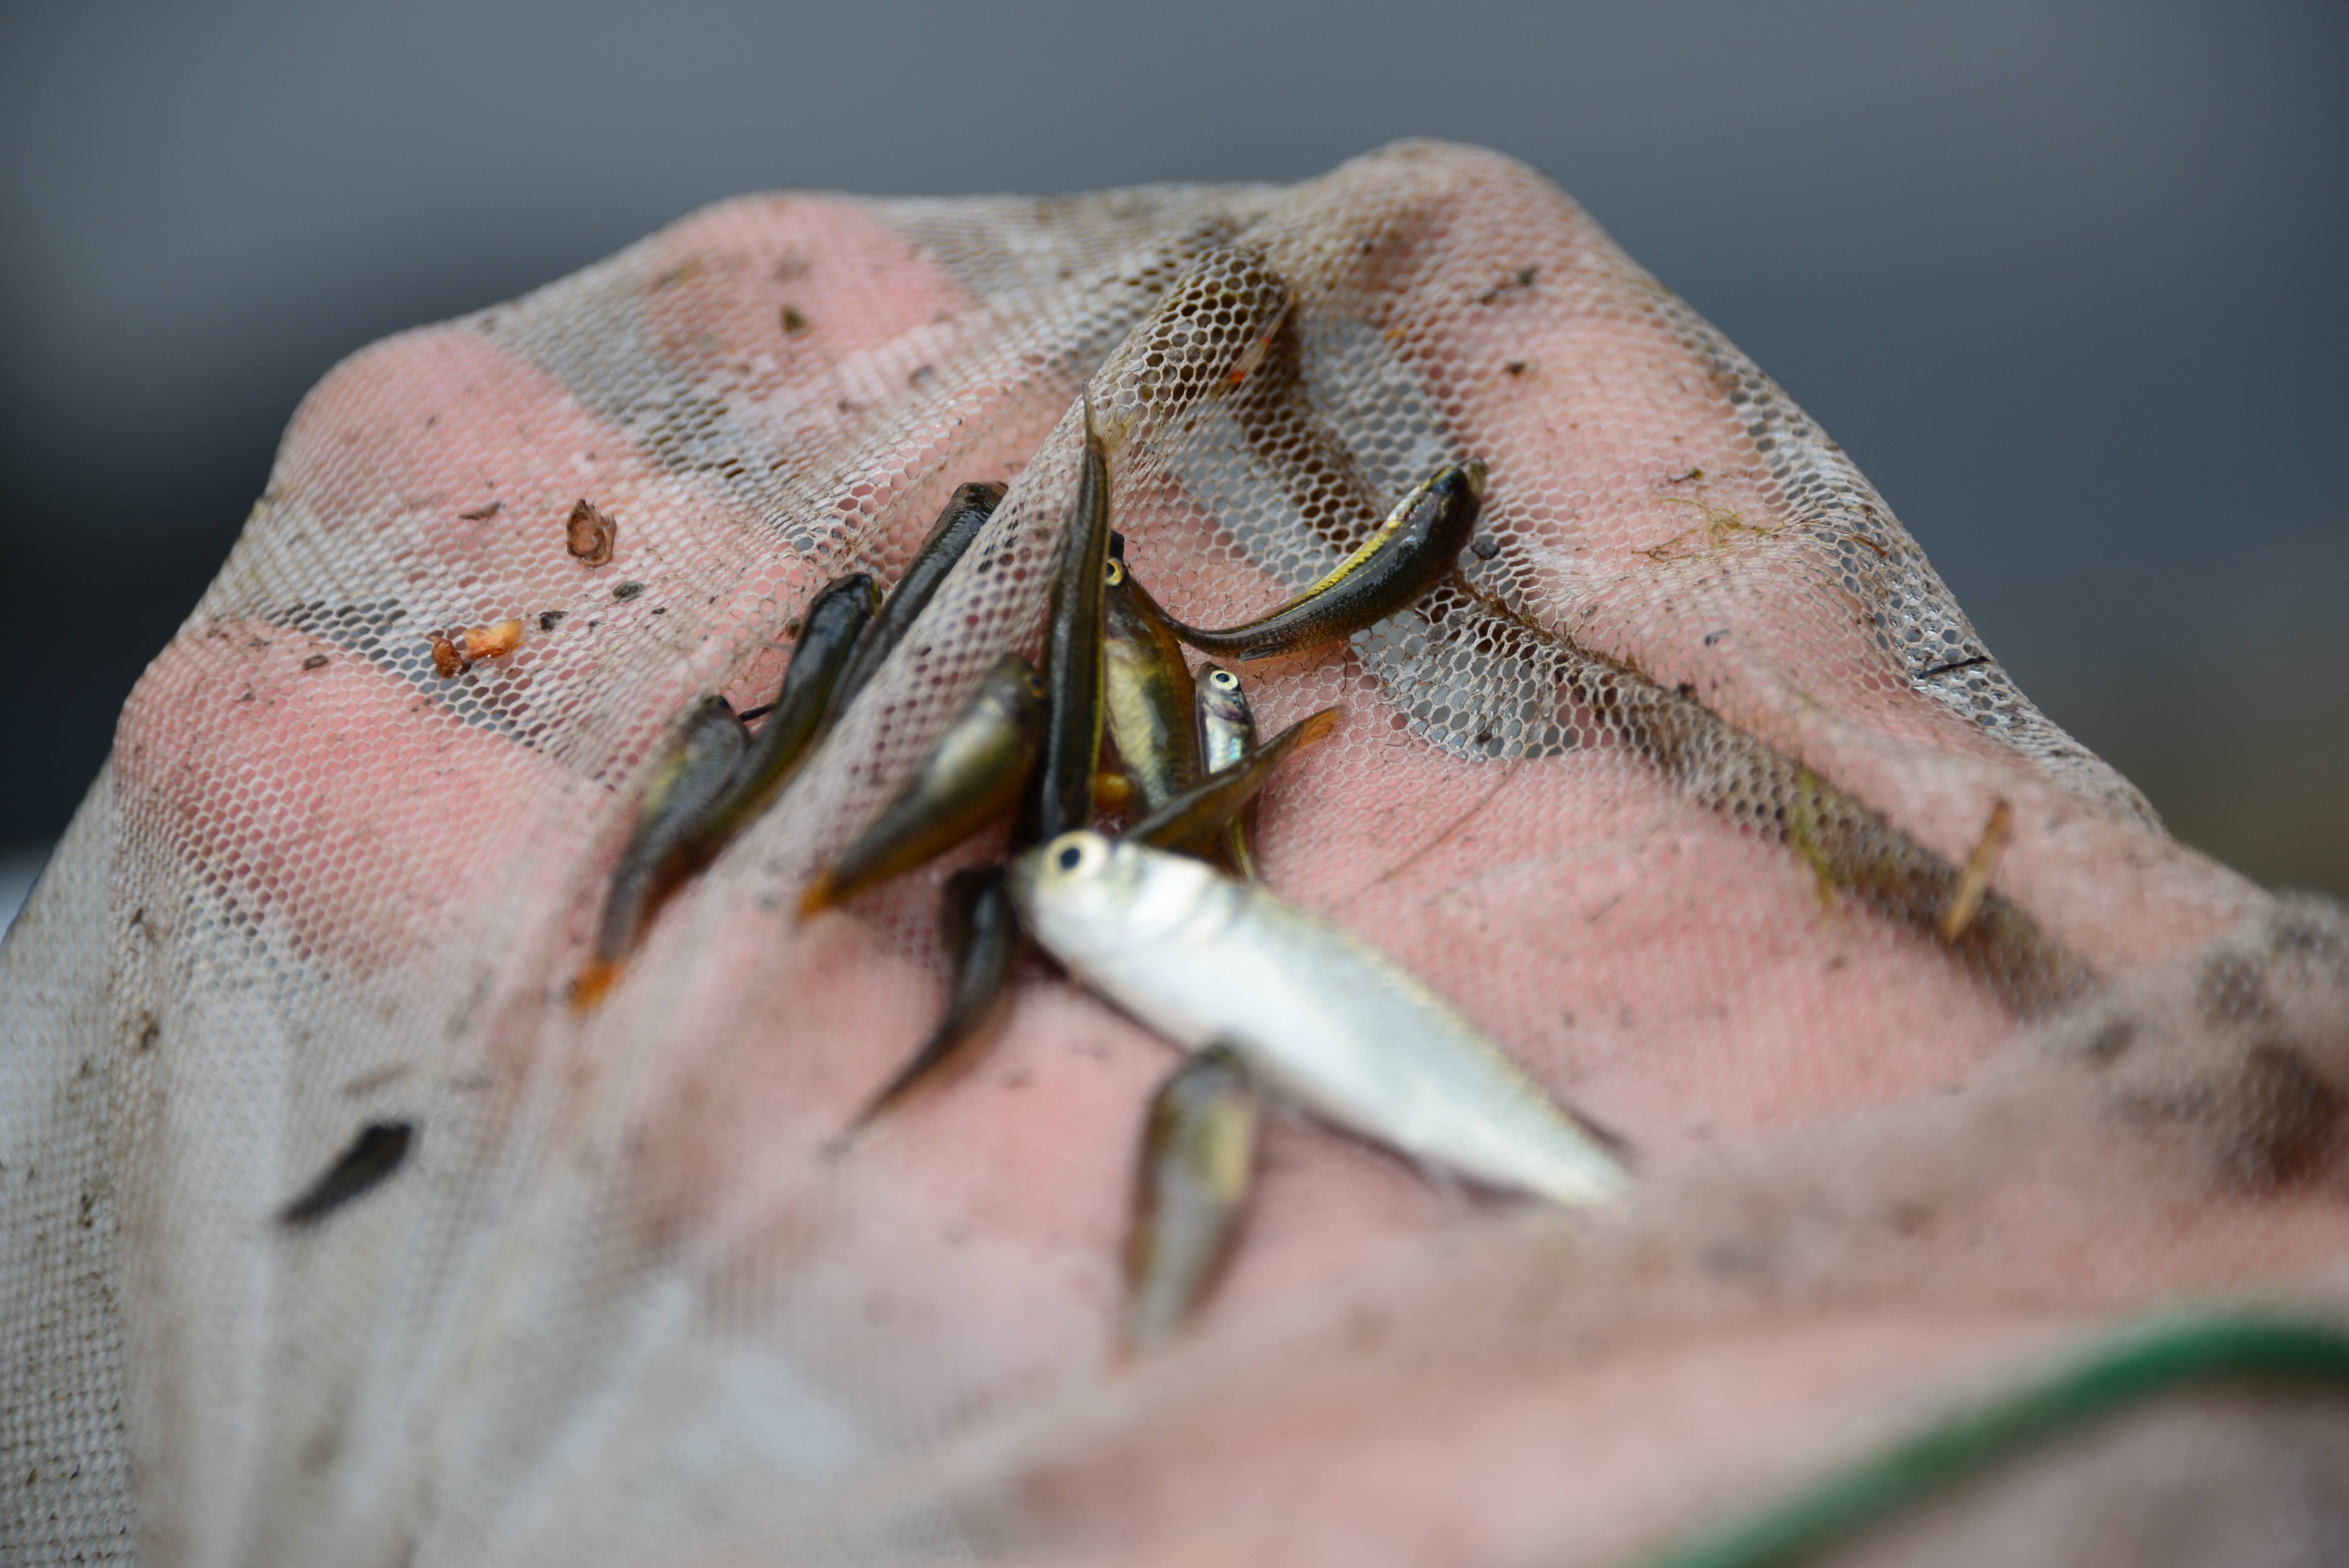 Pest fish species takes over Redland waterways, Redland City Bulletin